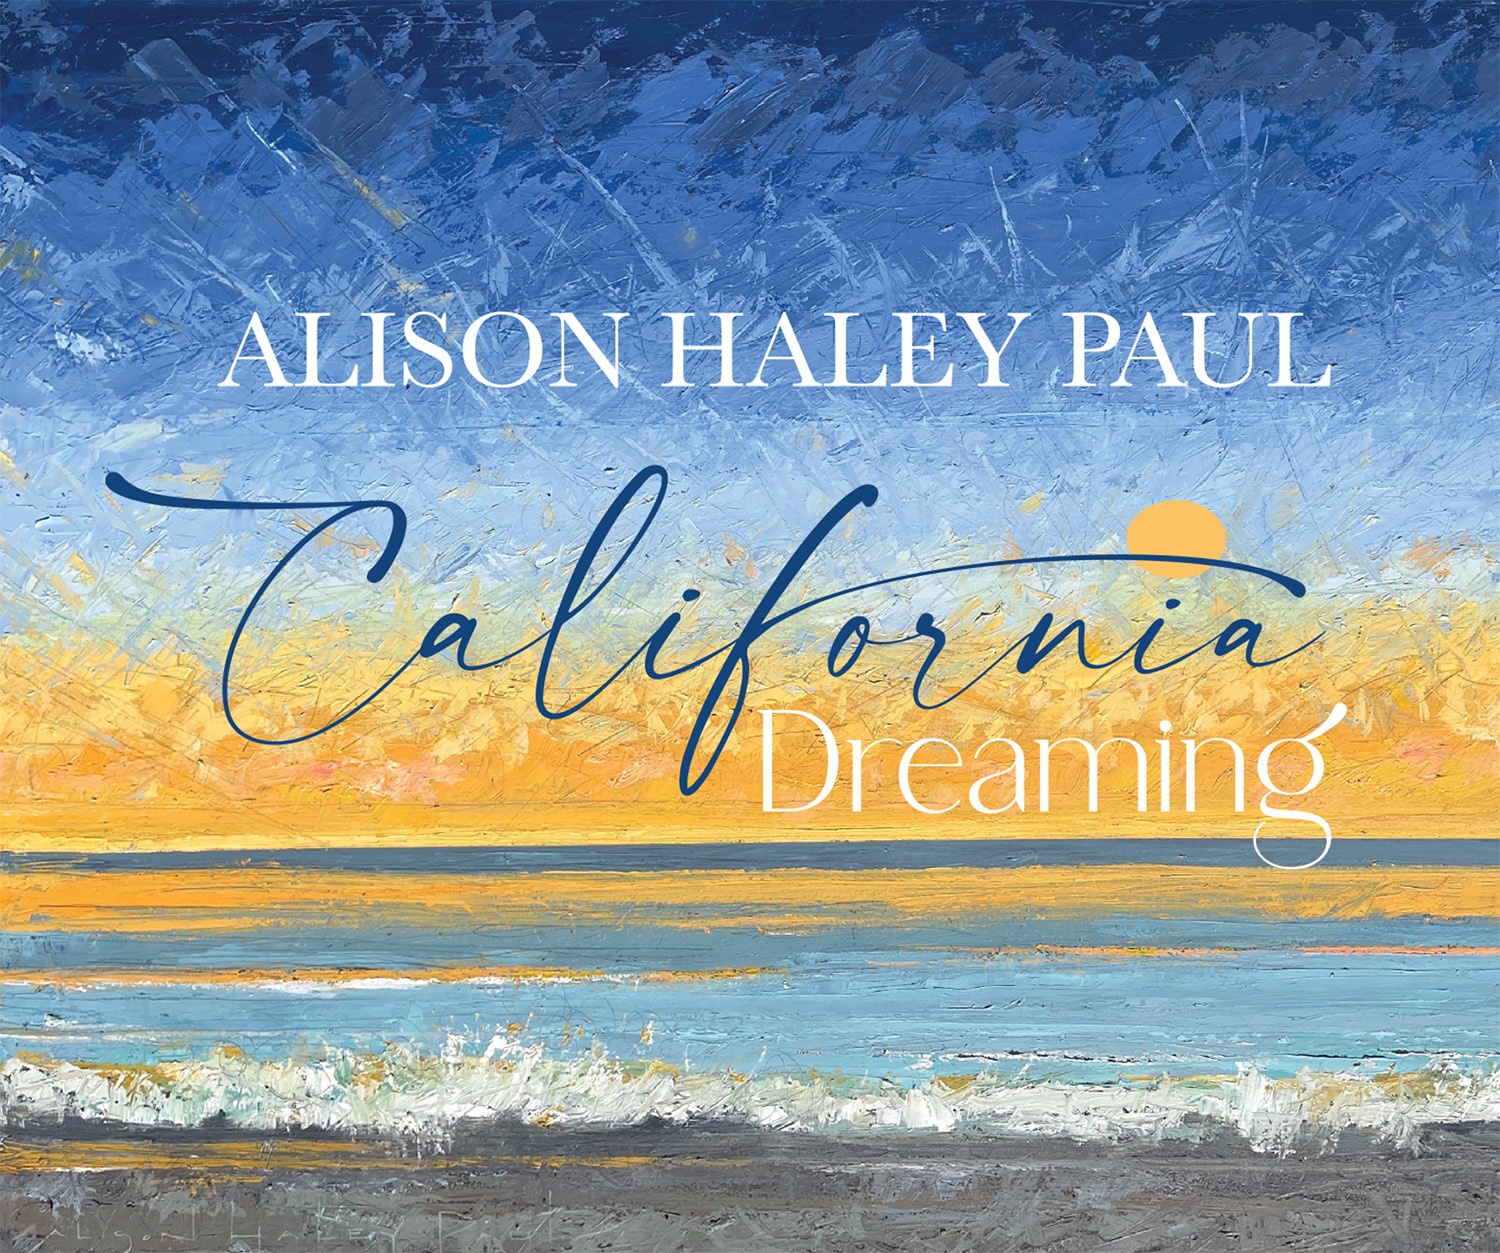 Alison Haley Paul - California Dreaming